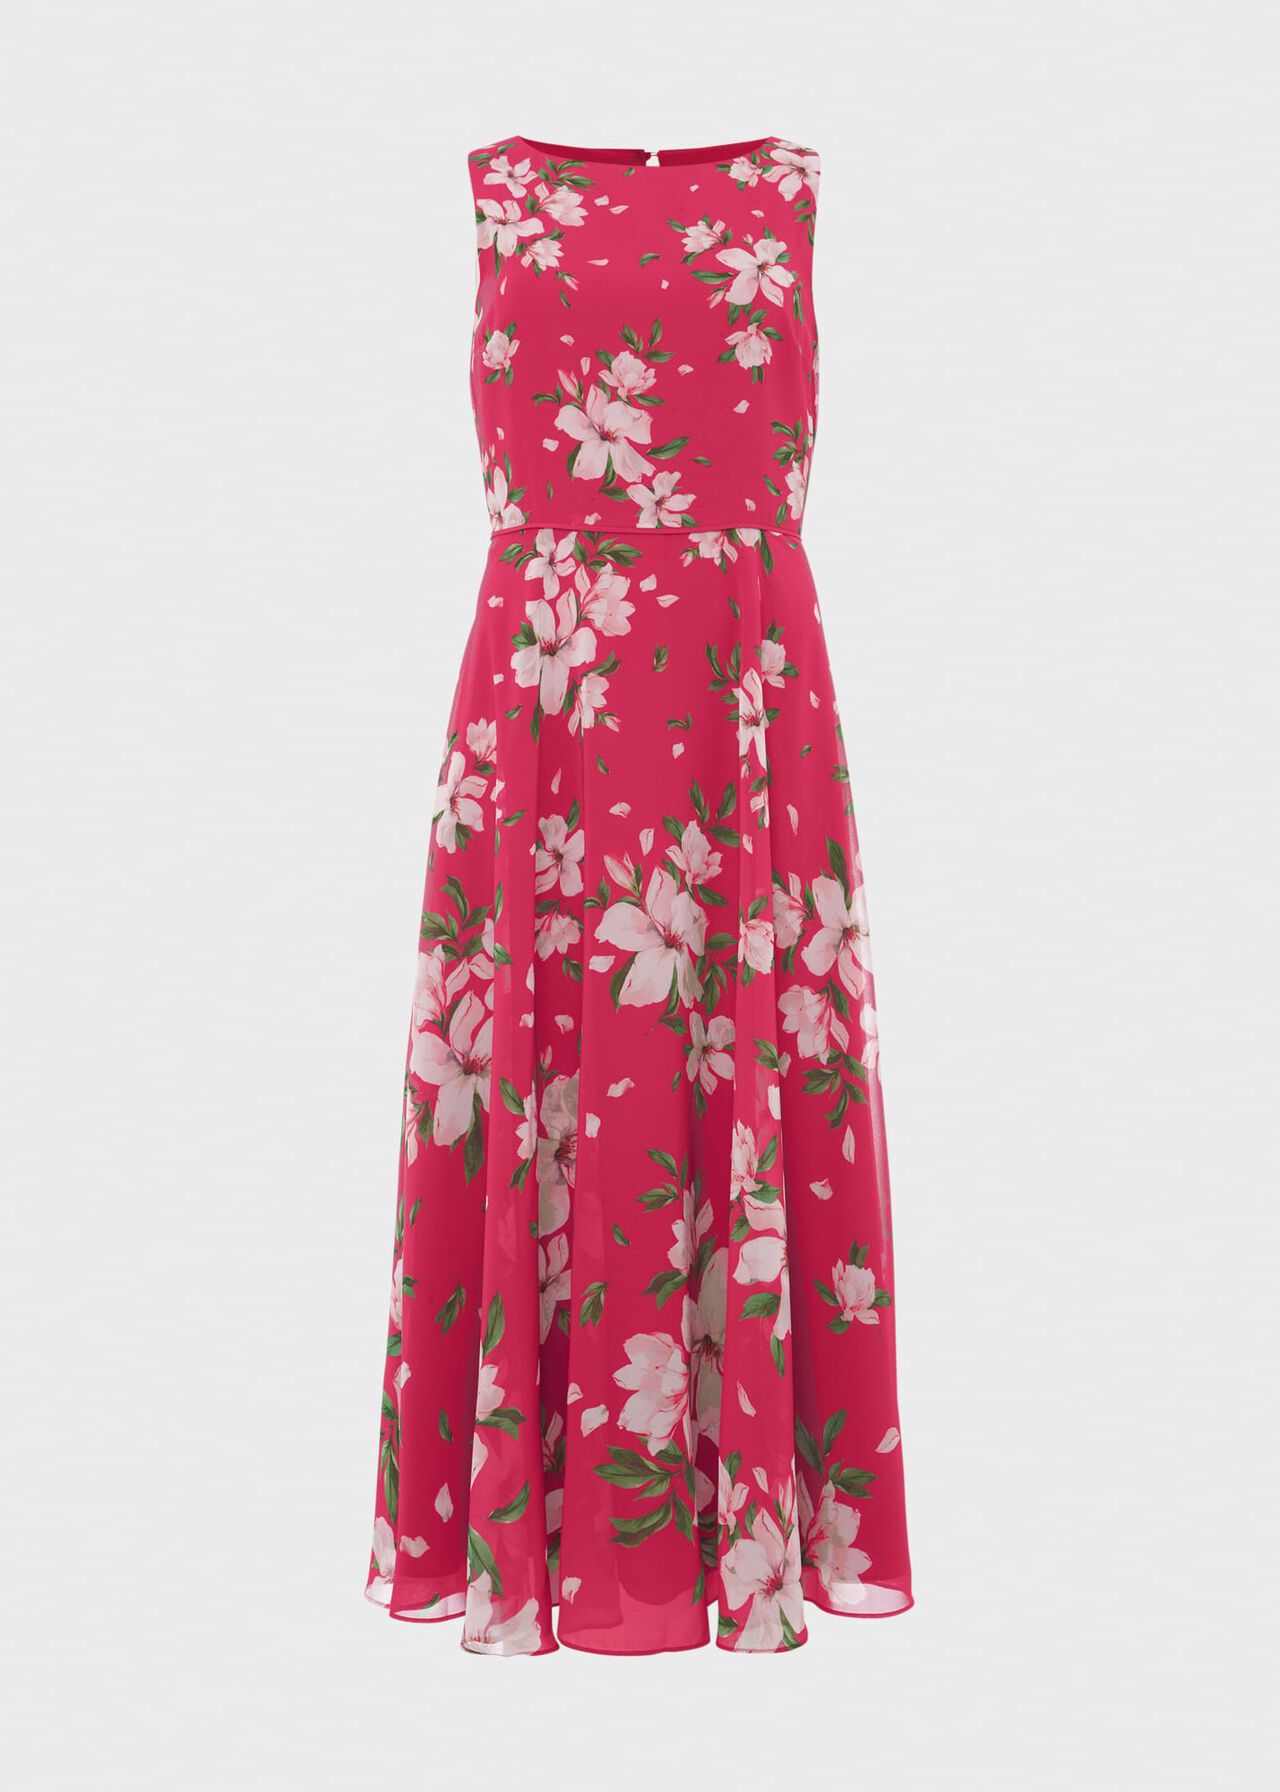 Carly Floral Midi Dress, Pink Multi, hi-res